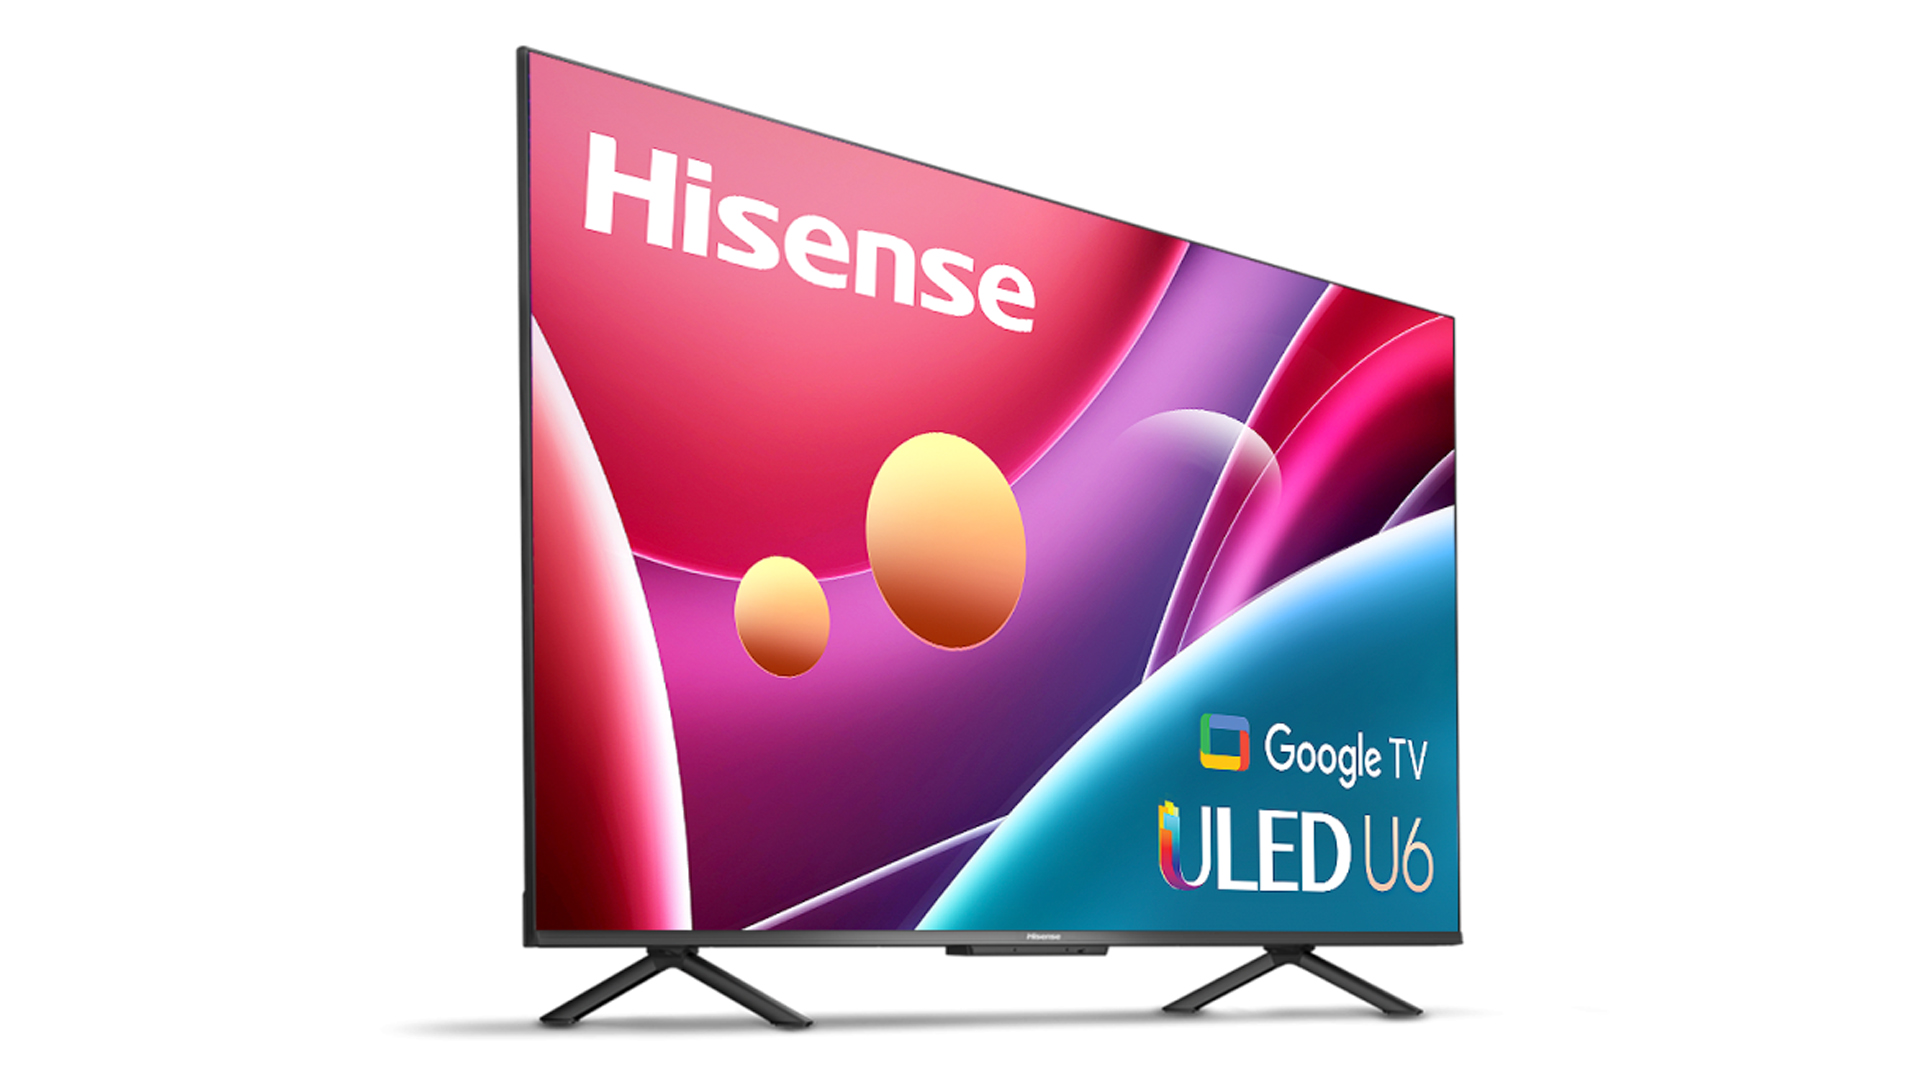 The Hisense U6H Google TV